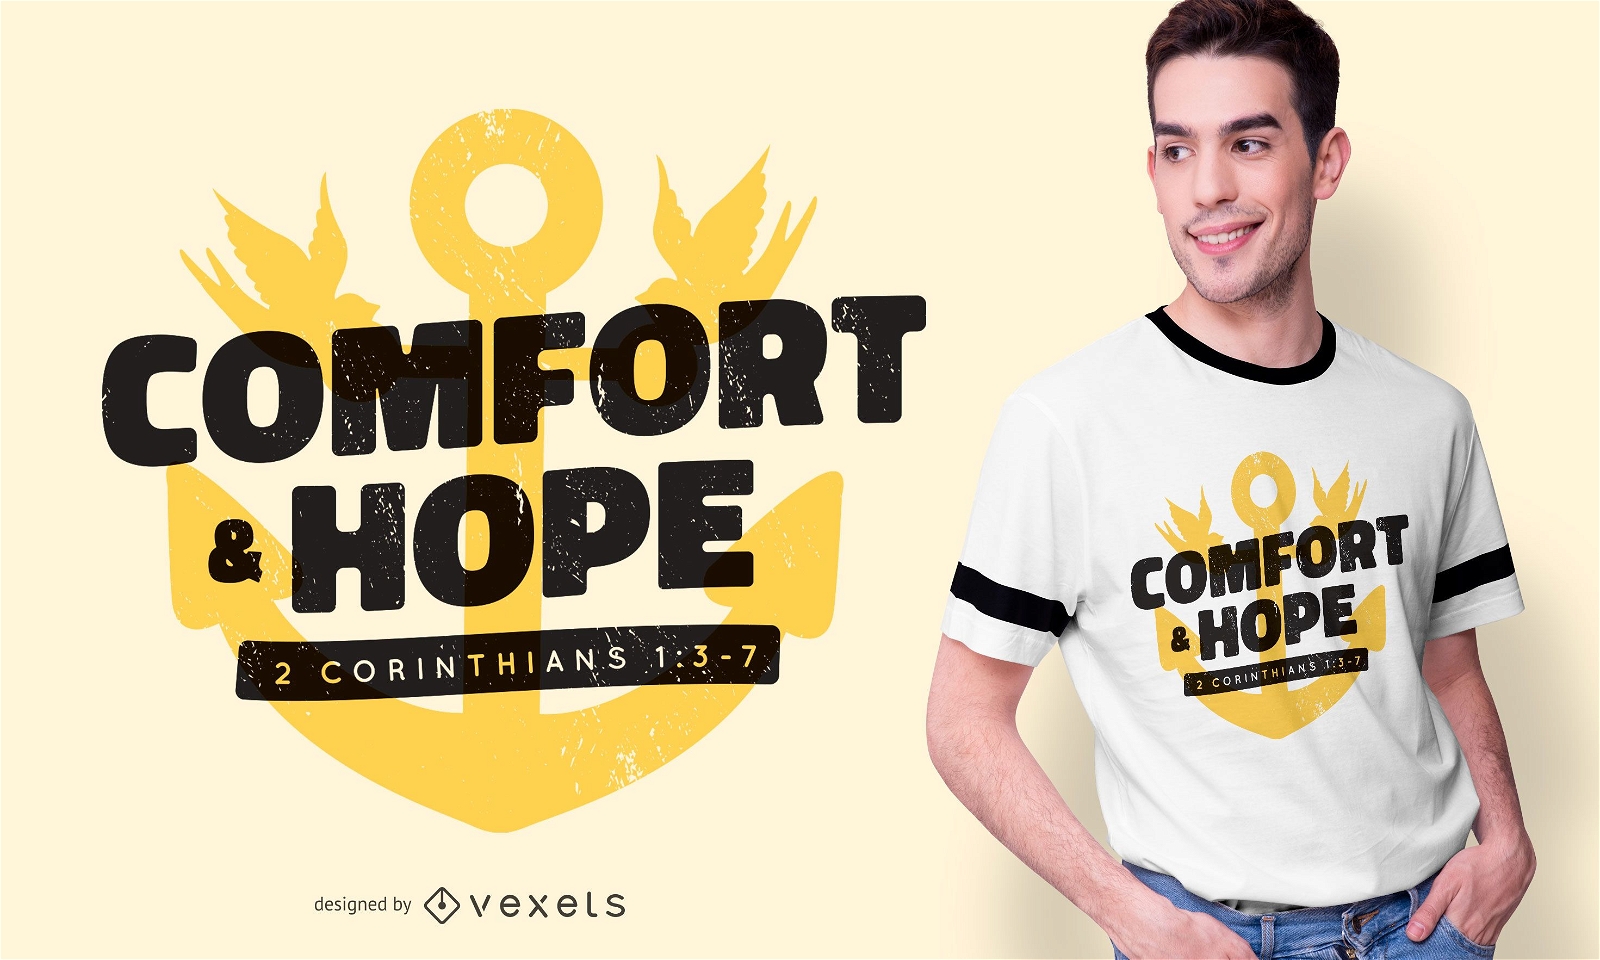 Comfort & hope t-shirt design